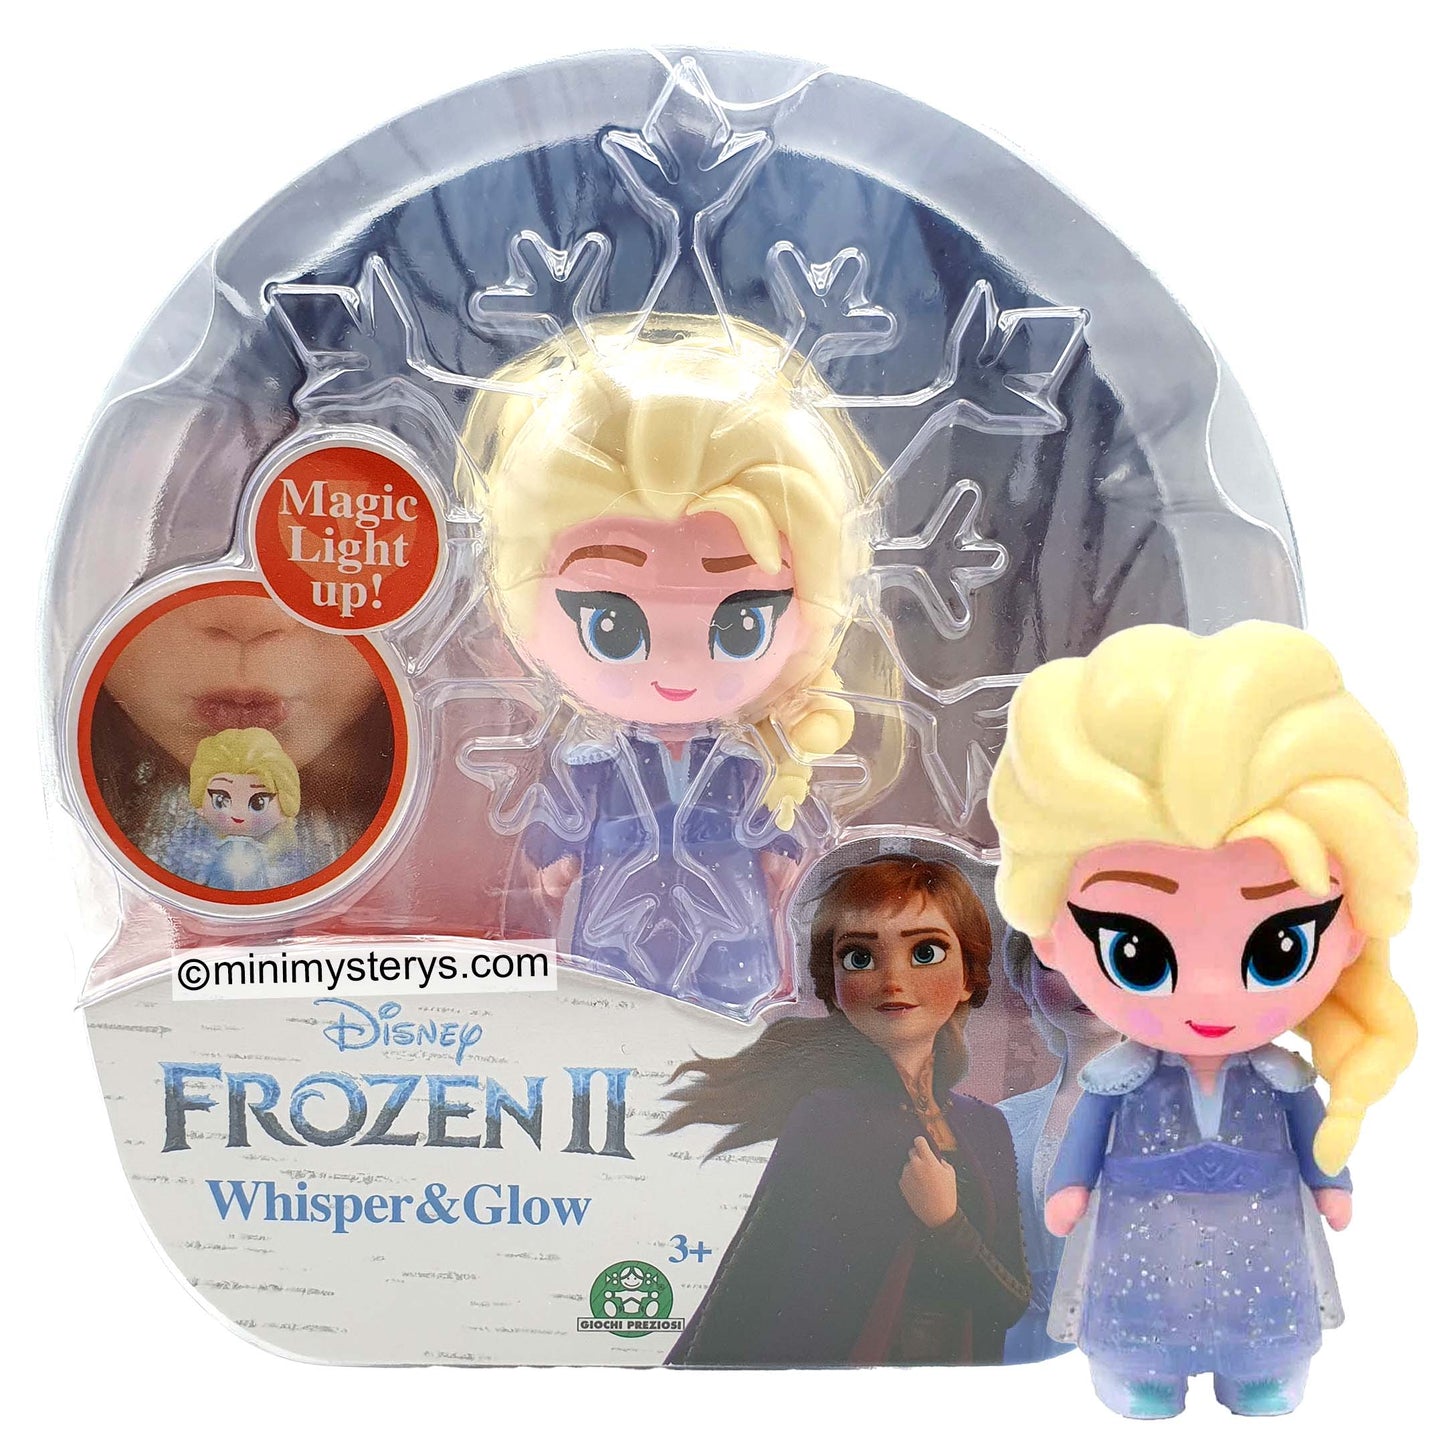 Disney Frozen 2 Whisper&Glow, Confronta prezzi